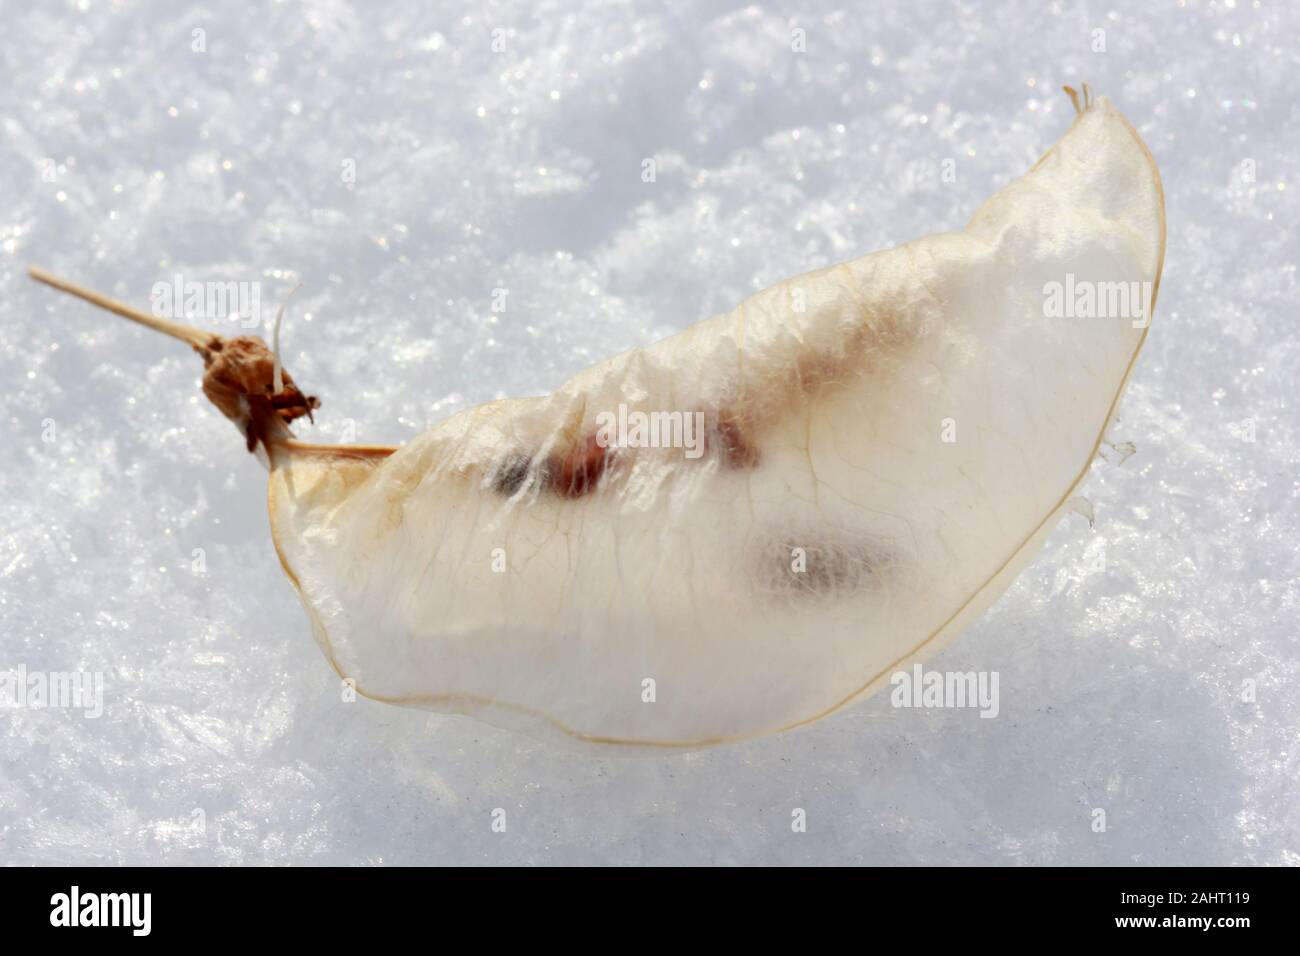 Colutea Arborescens Seed Pods, Snow Stock Photo